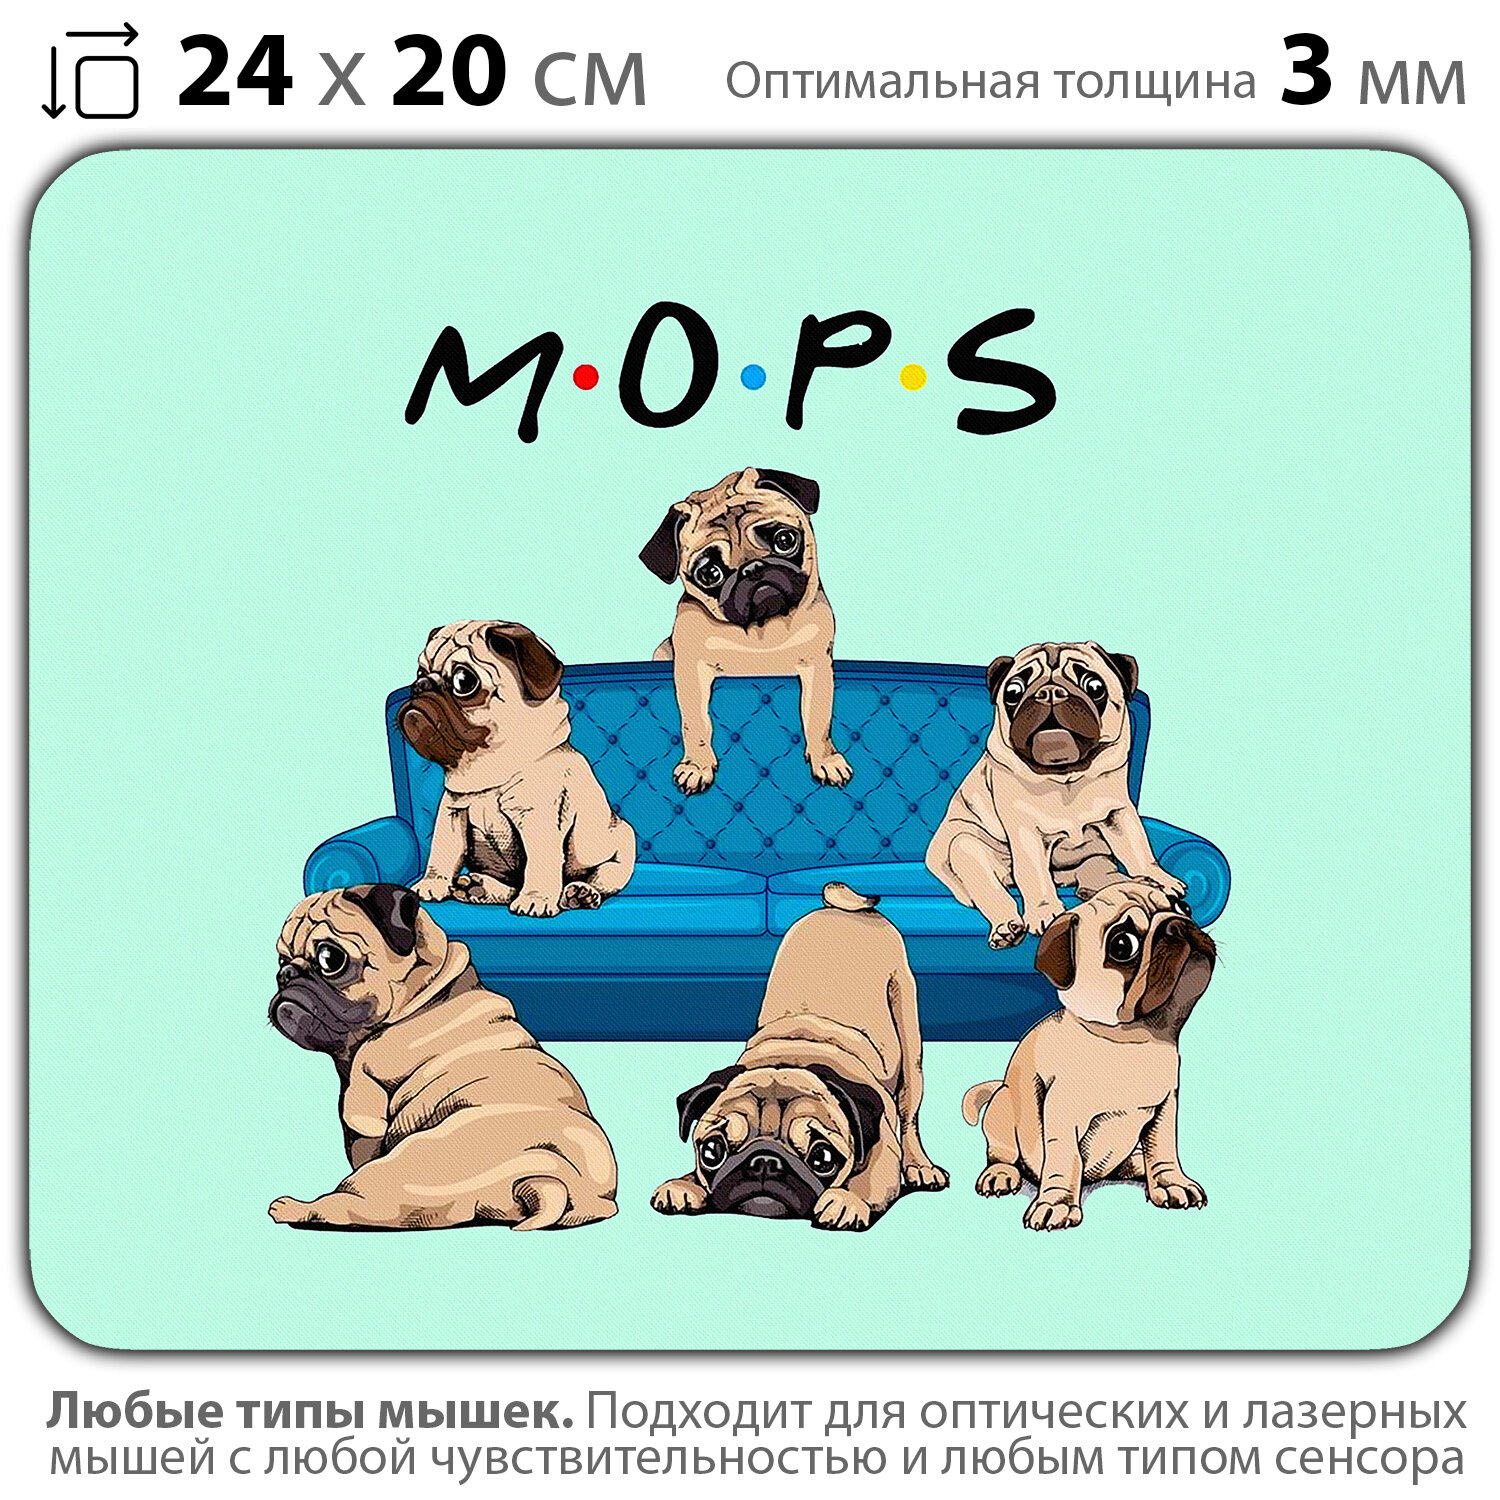 Коврик для мыши "Мопсы друзья" (24 x 20 см x 3 мм)